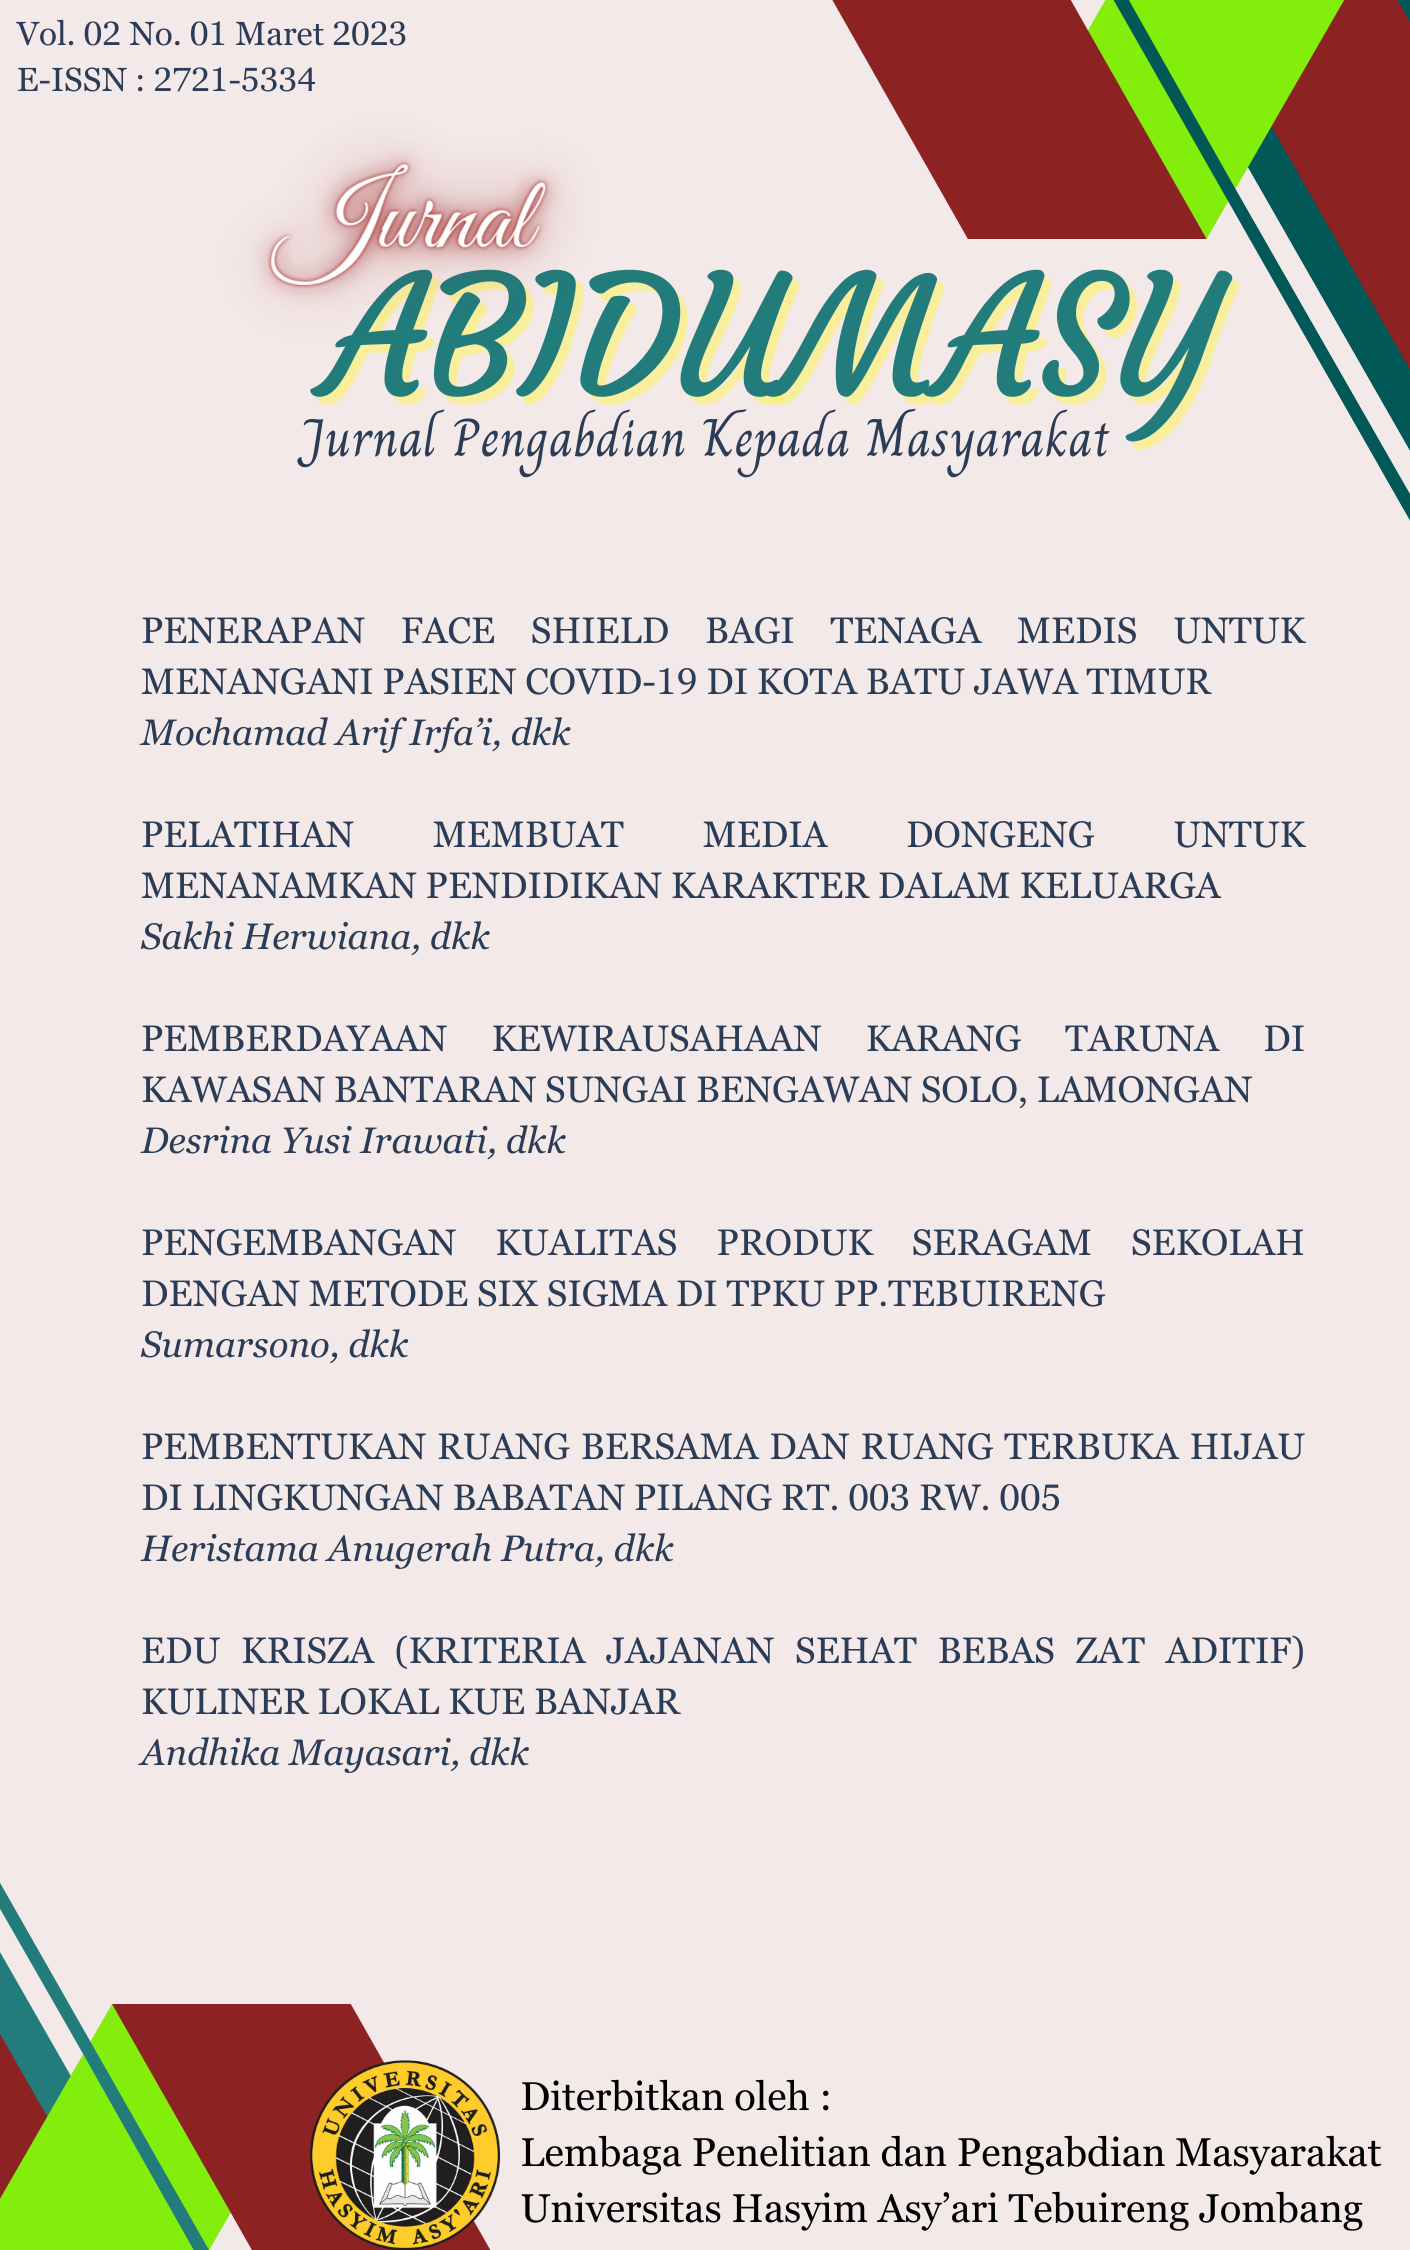 					View Vol. 2 No. 1 (2021): ABIDUMASY : JURNAL PENGABDIAN KEPADA MASYARAKAT
				